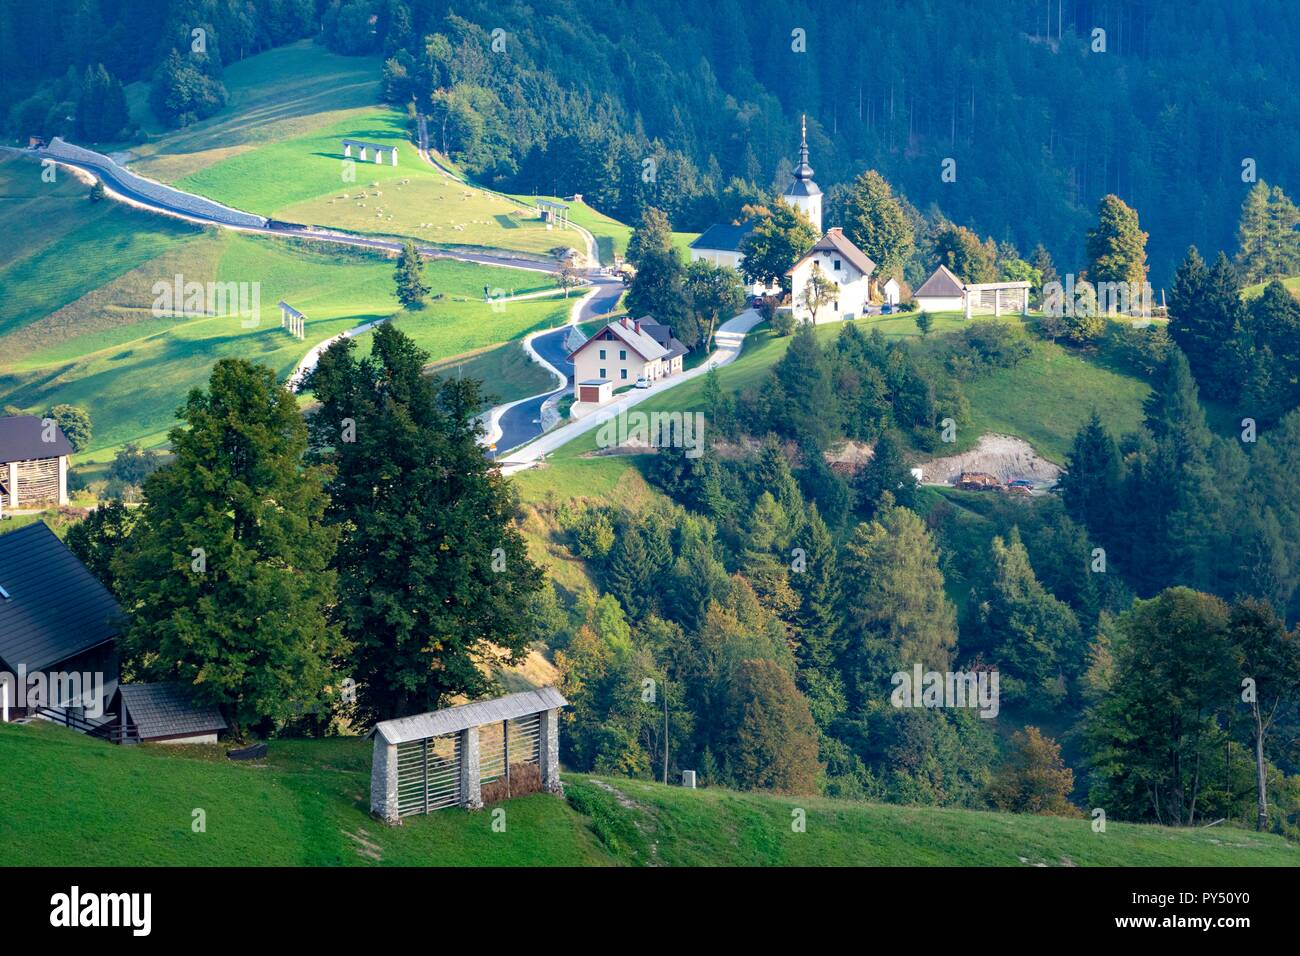 Slovenia, the small village of Spodnja is nestled between de mountain ranges of the Julian Alps Stock Photo